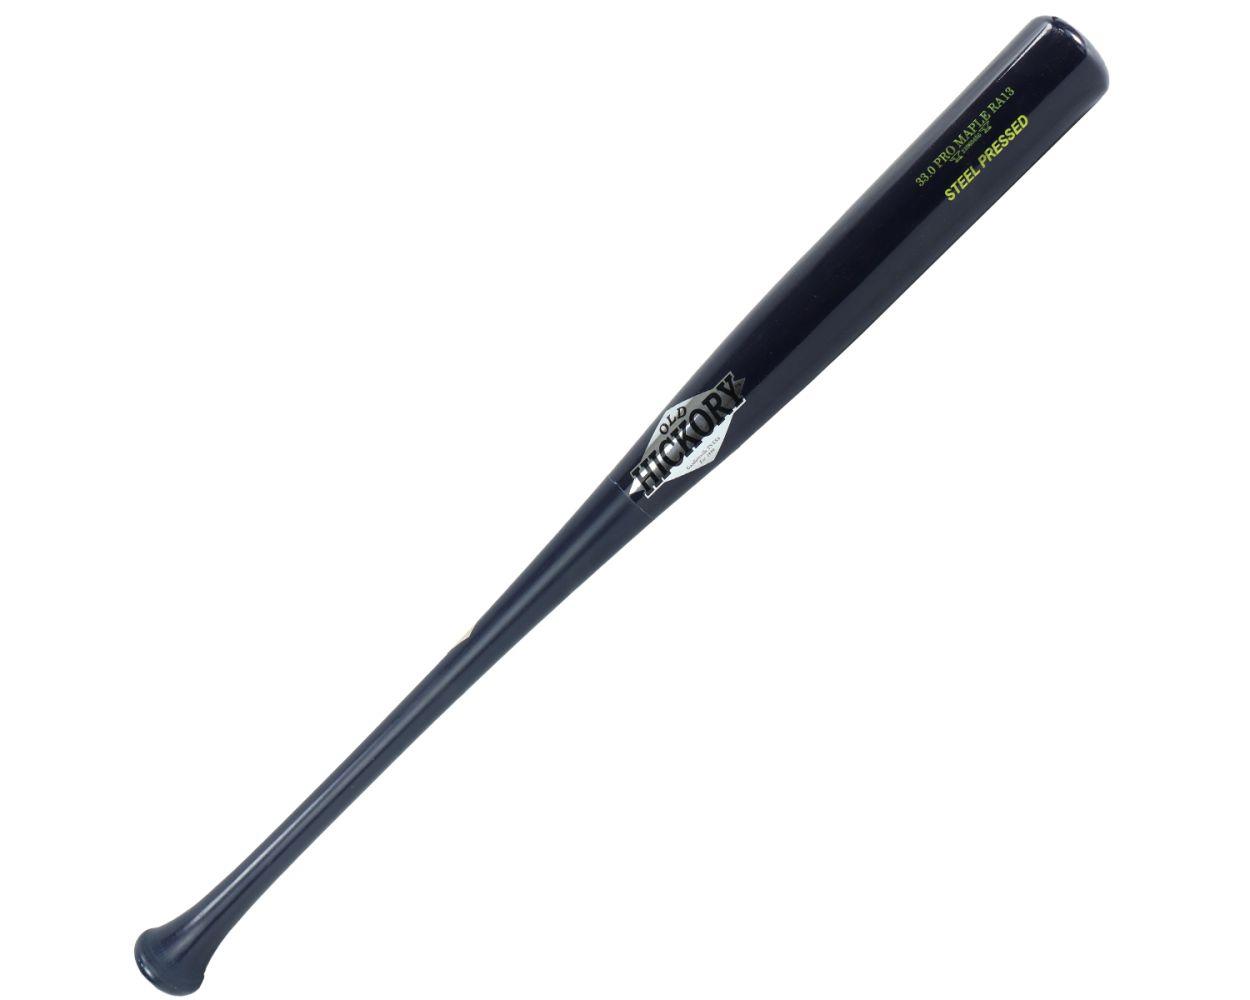 Louisville slugger wood bats 33.5 and 33.0